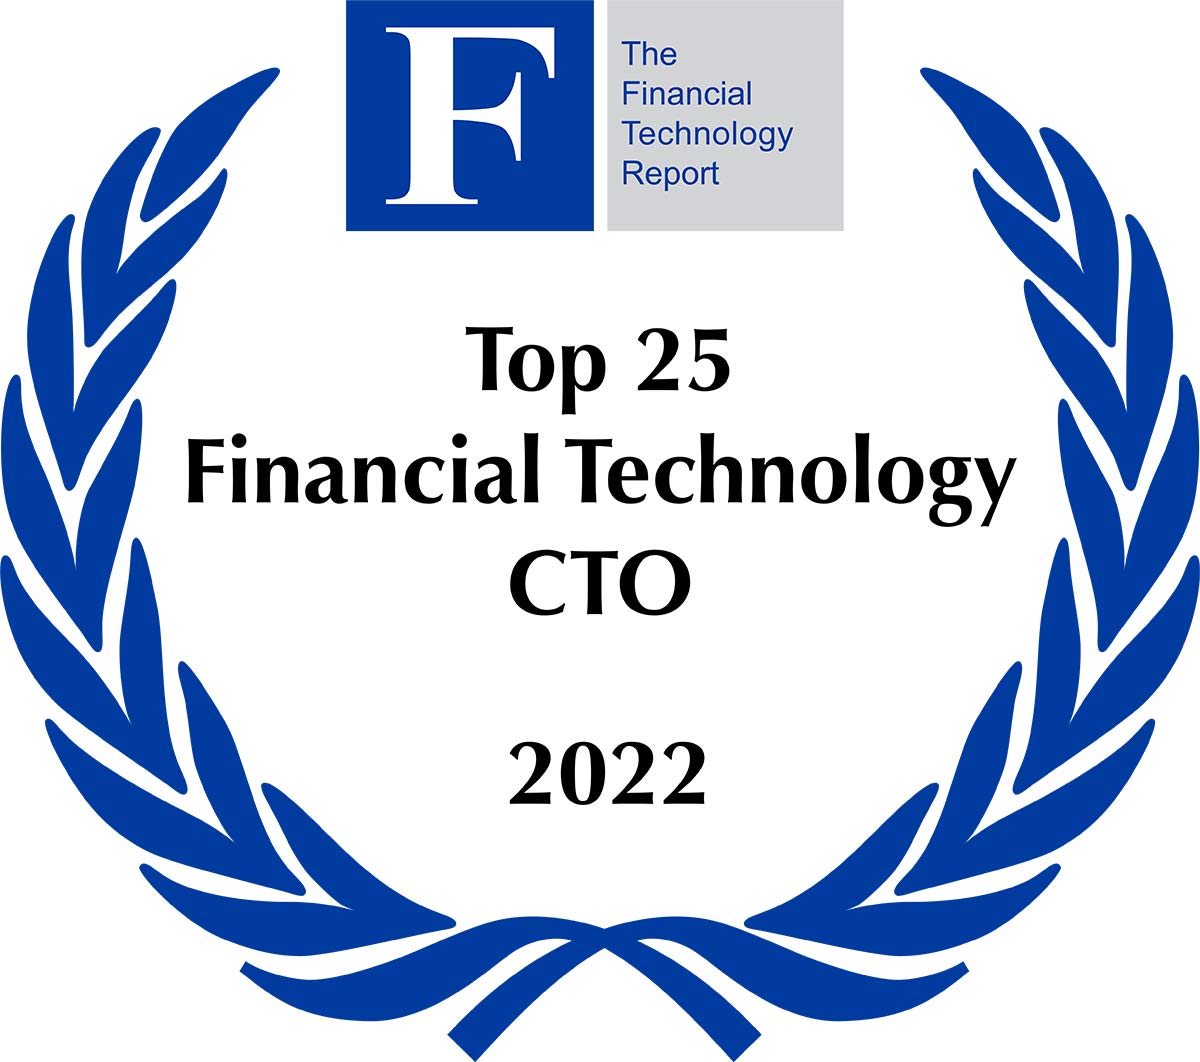 Top 25 Financial Technology CTO 2022